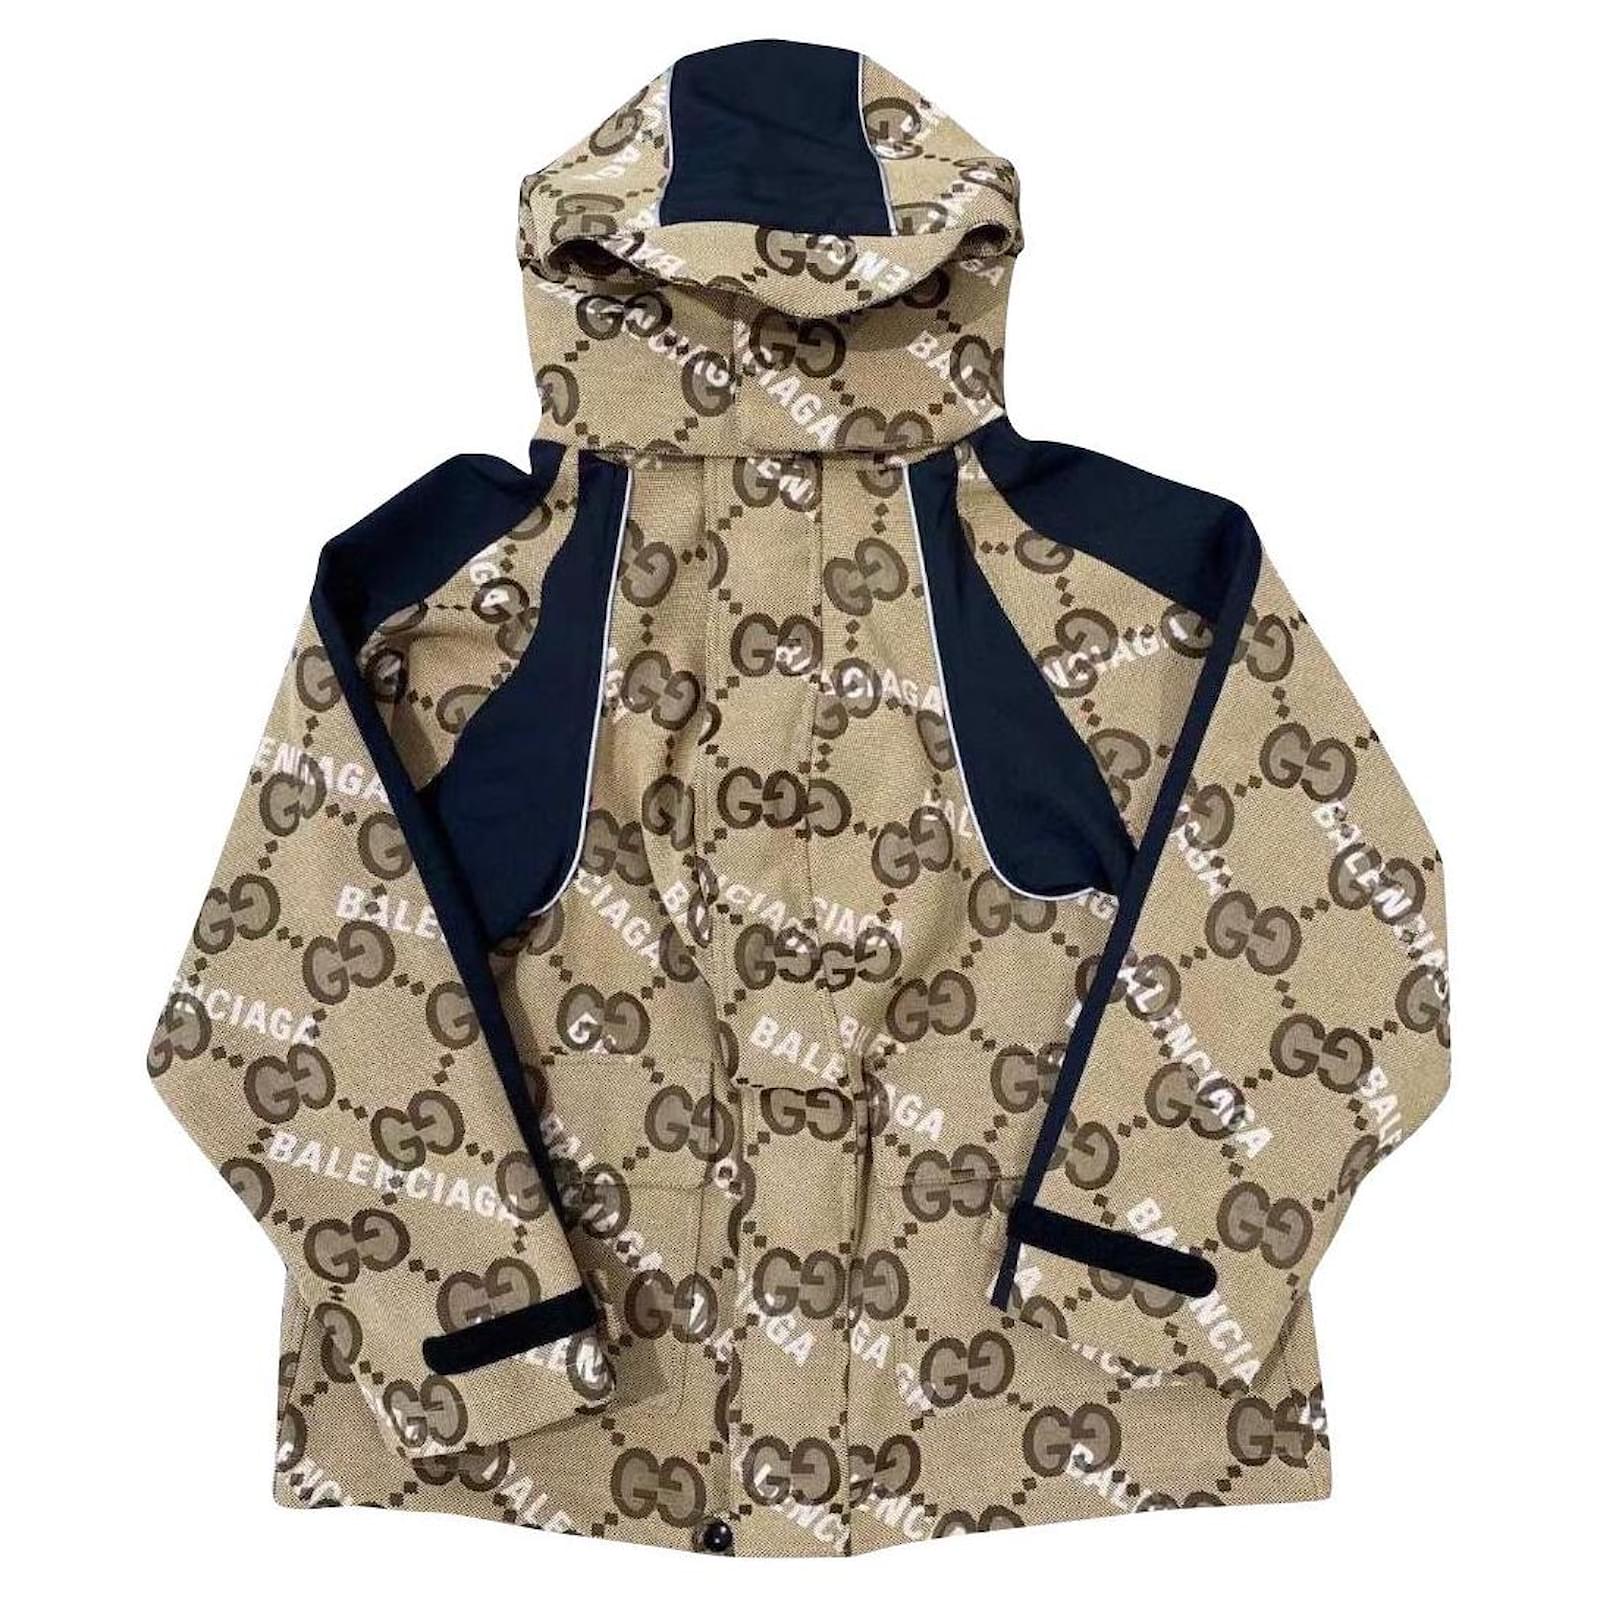 Limited Edition The Hacker Project Jumbo GG Jacket by Gucci x Balenciaga   SLOANE ST PERTH WA